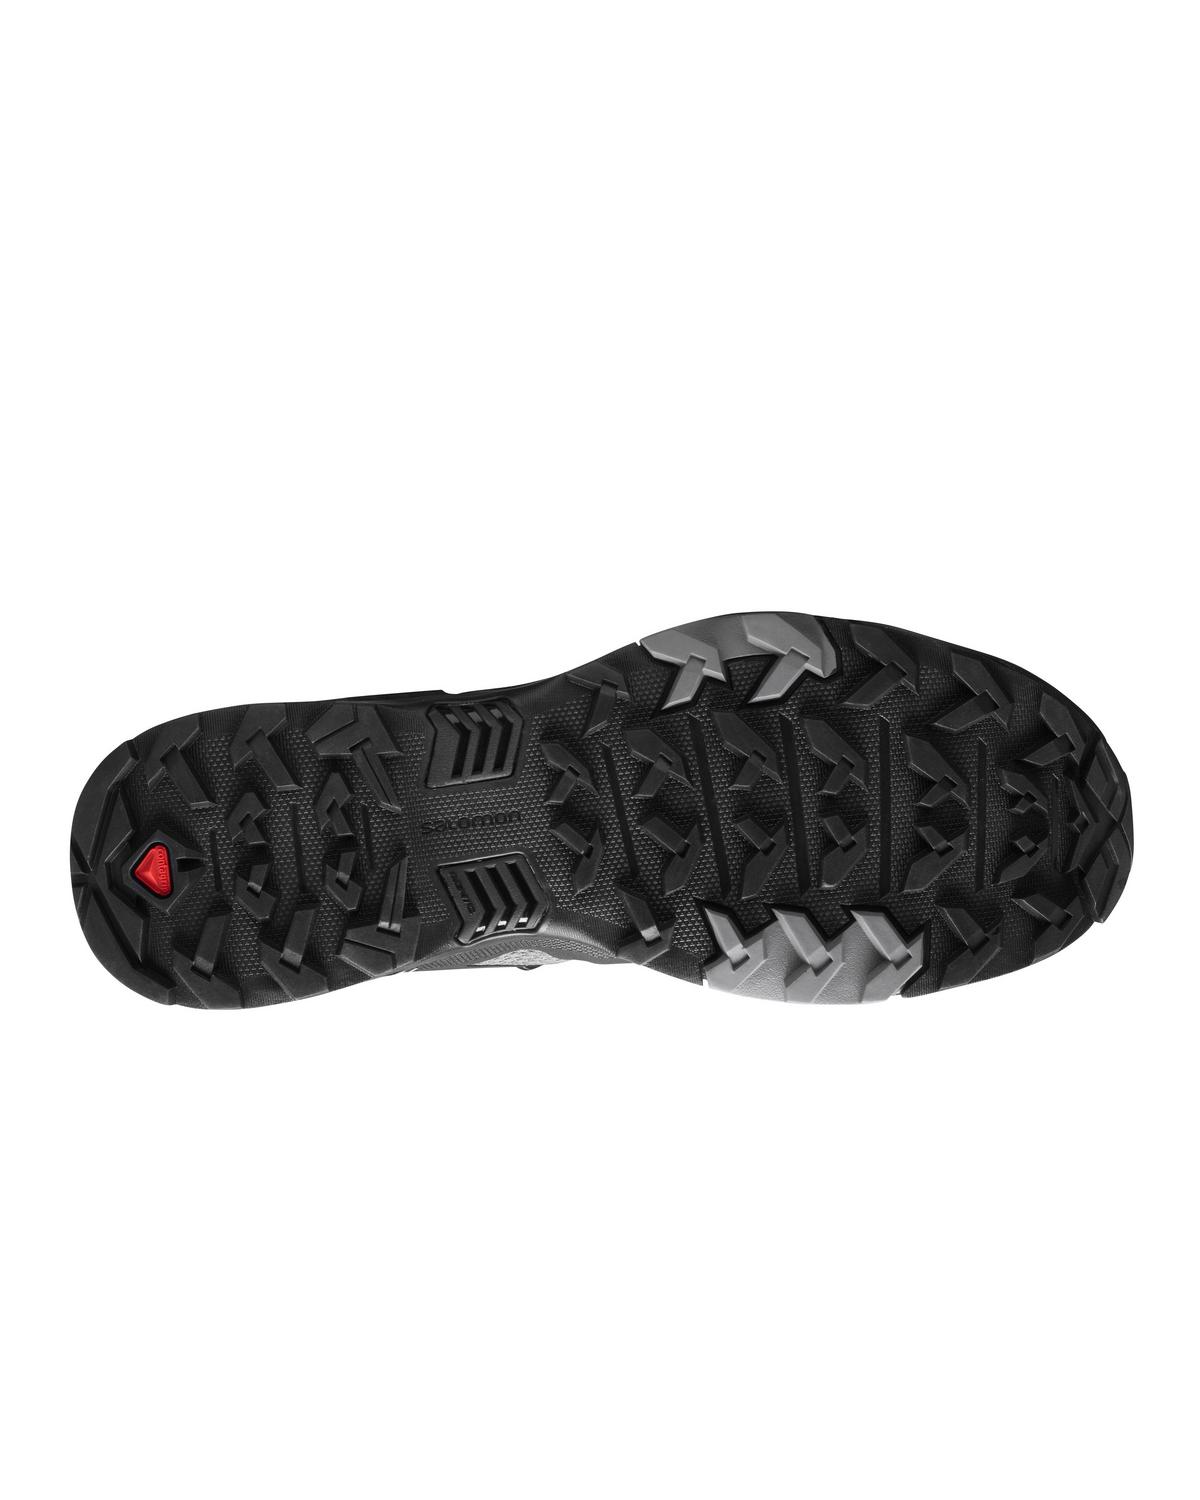 Salomon Men’s X Ultra 4 Hiking Shoes -  Grey